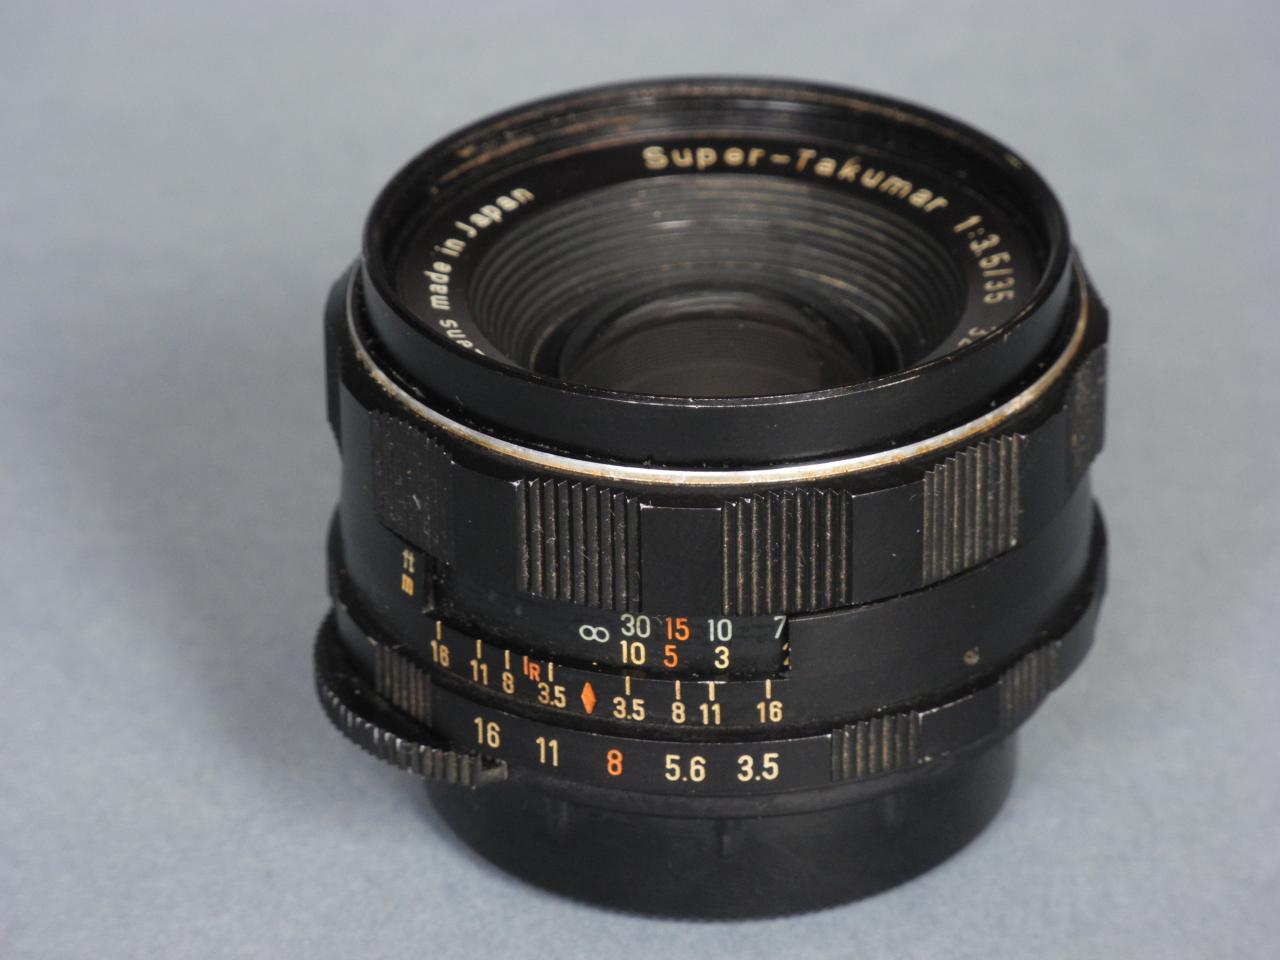 *objectif Asahi Pentax  1:3,5/35mm  super Takumar*